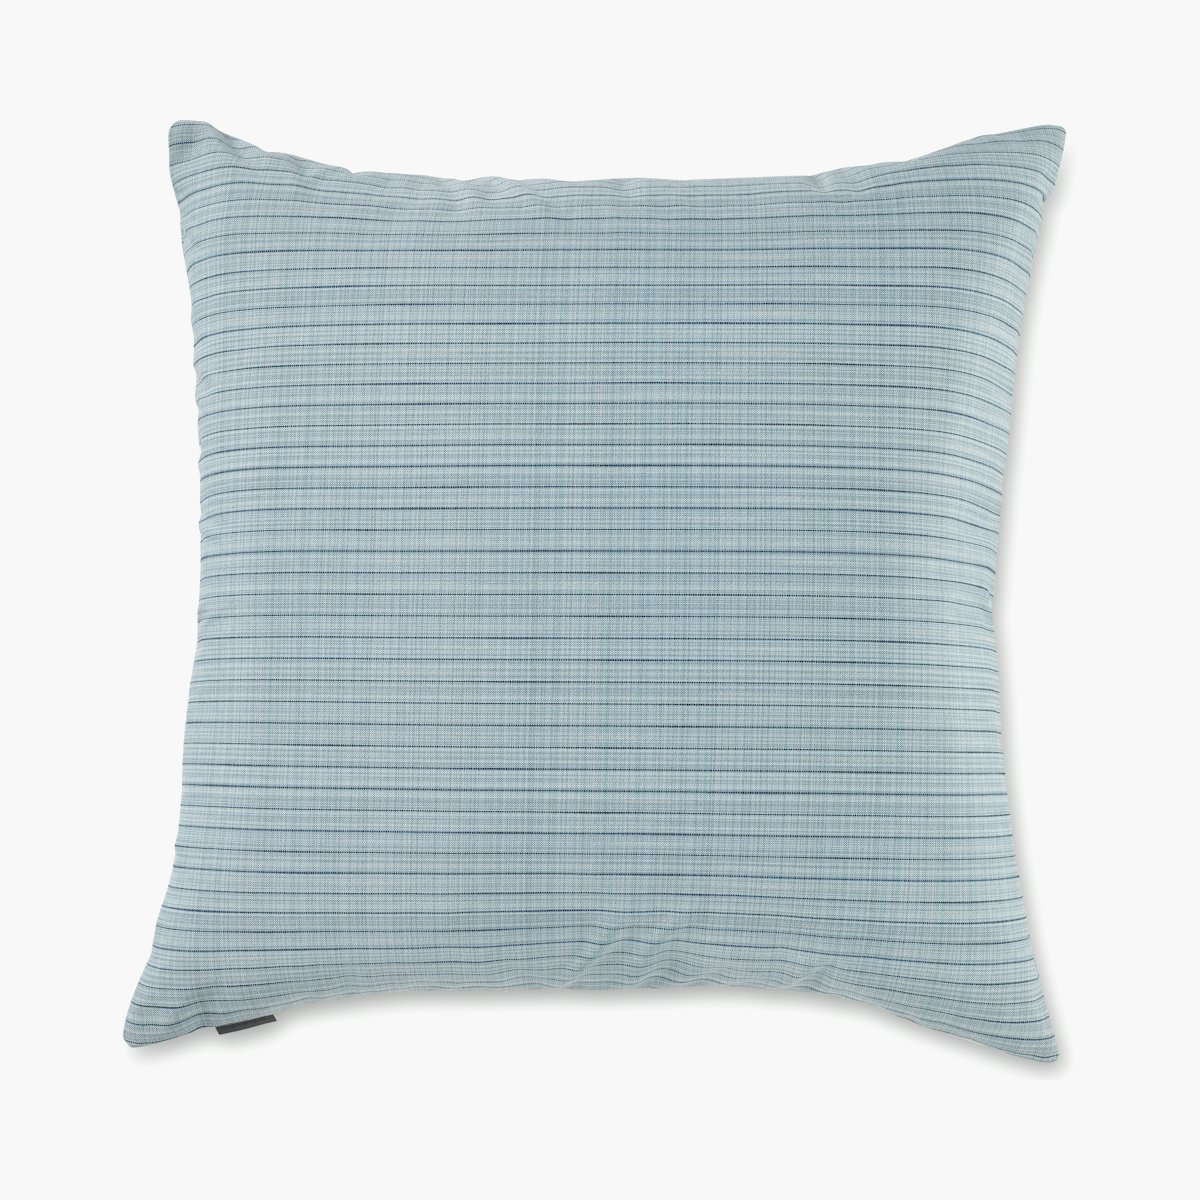 Sendal Outdoor Pillow